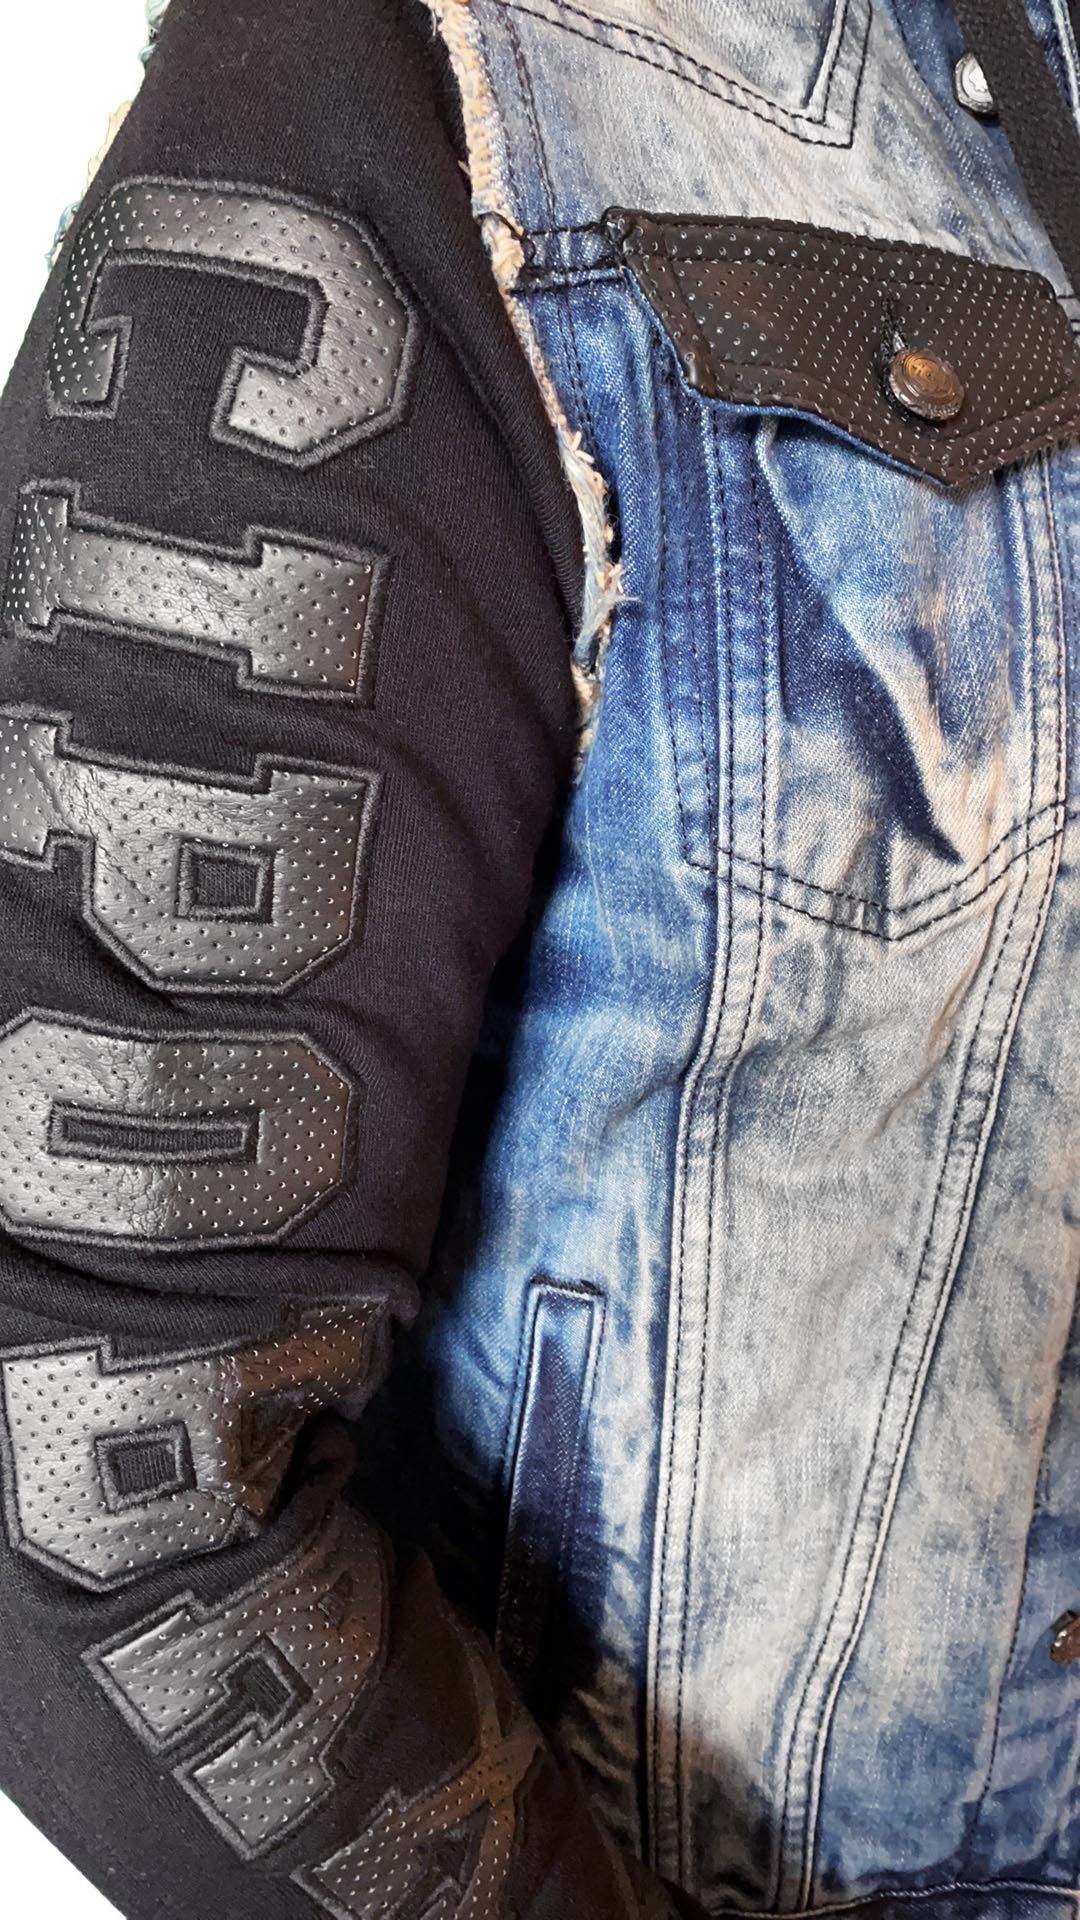 Cipo &amp; Baxx IOWA Men's Jeans Jacket Vest Denim Hoodie CJ154